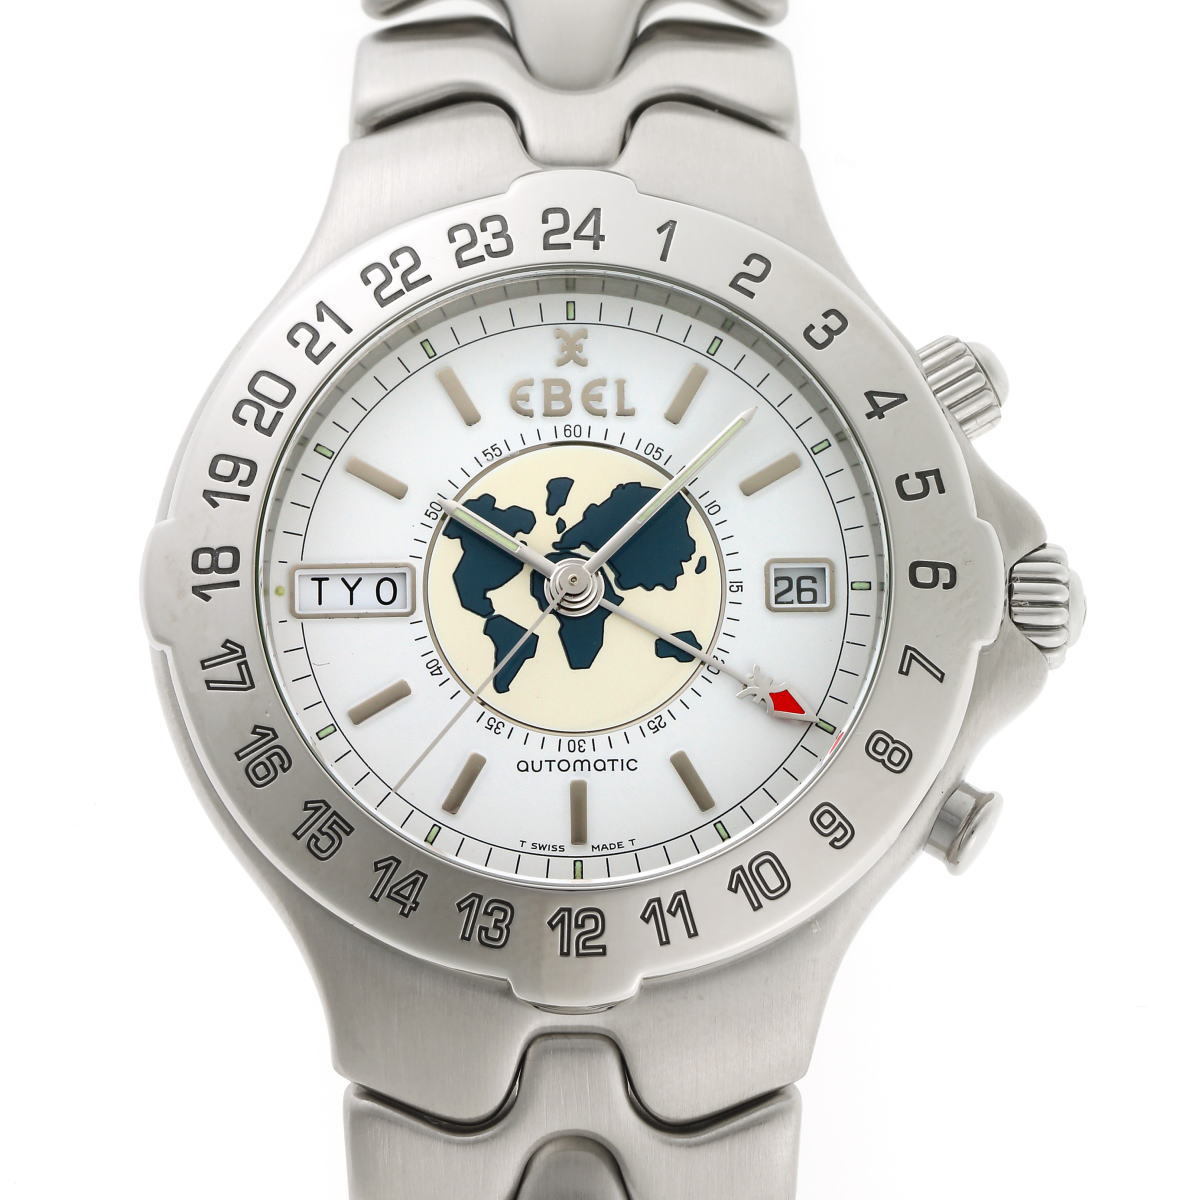 EBEL Ebel спорт wave World Time автоматический E9122641 SS мужской часы 2310306